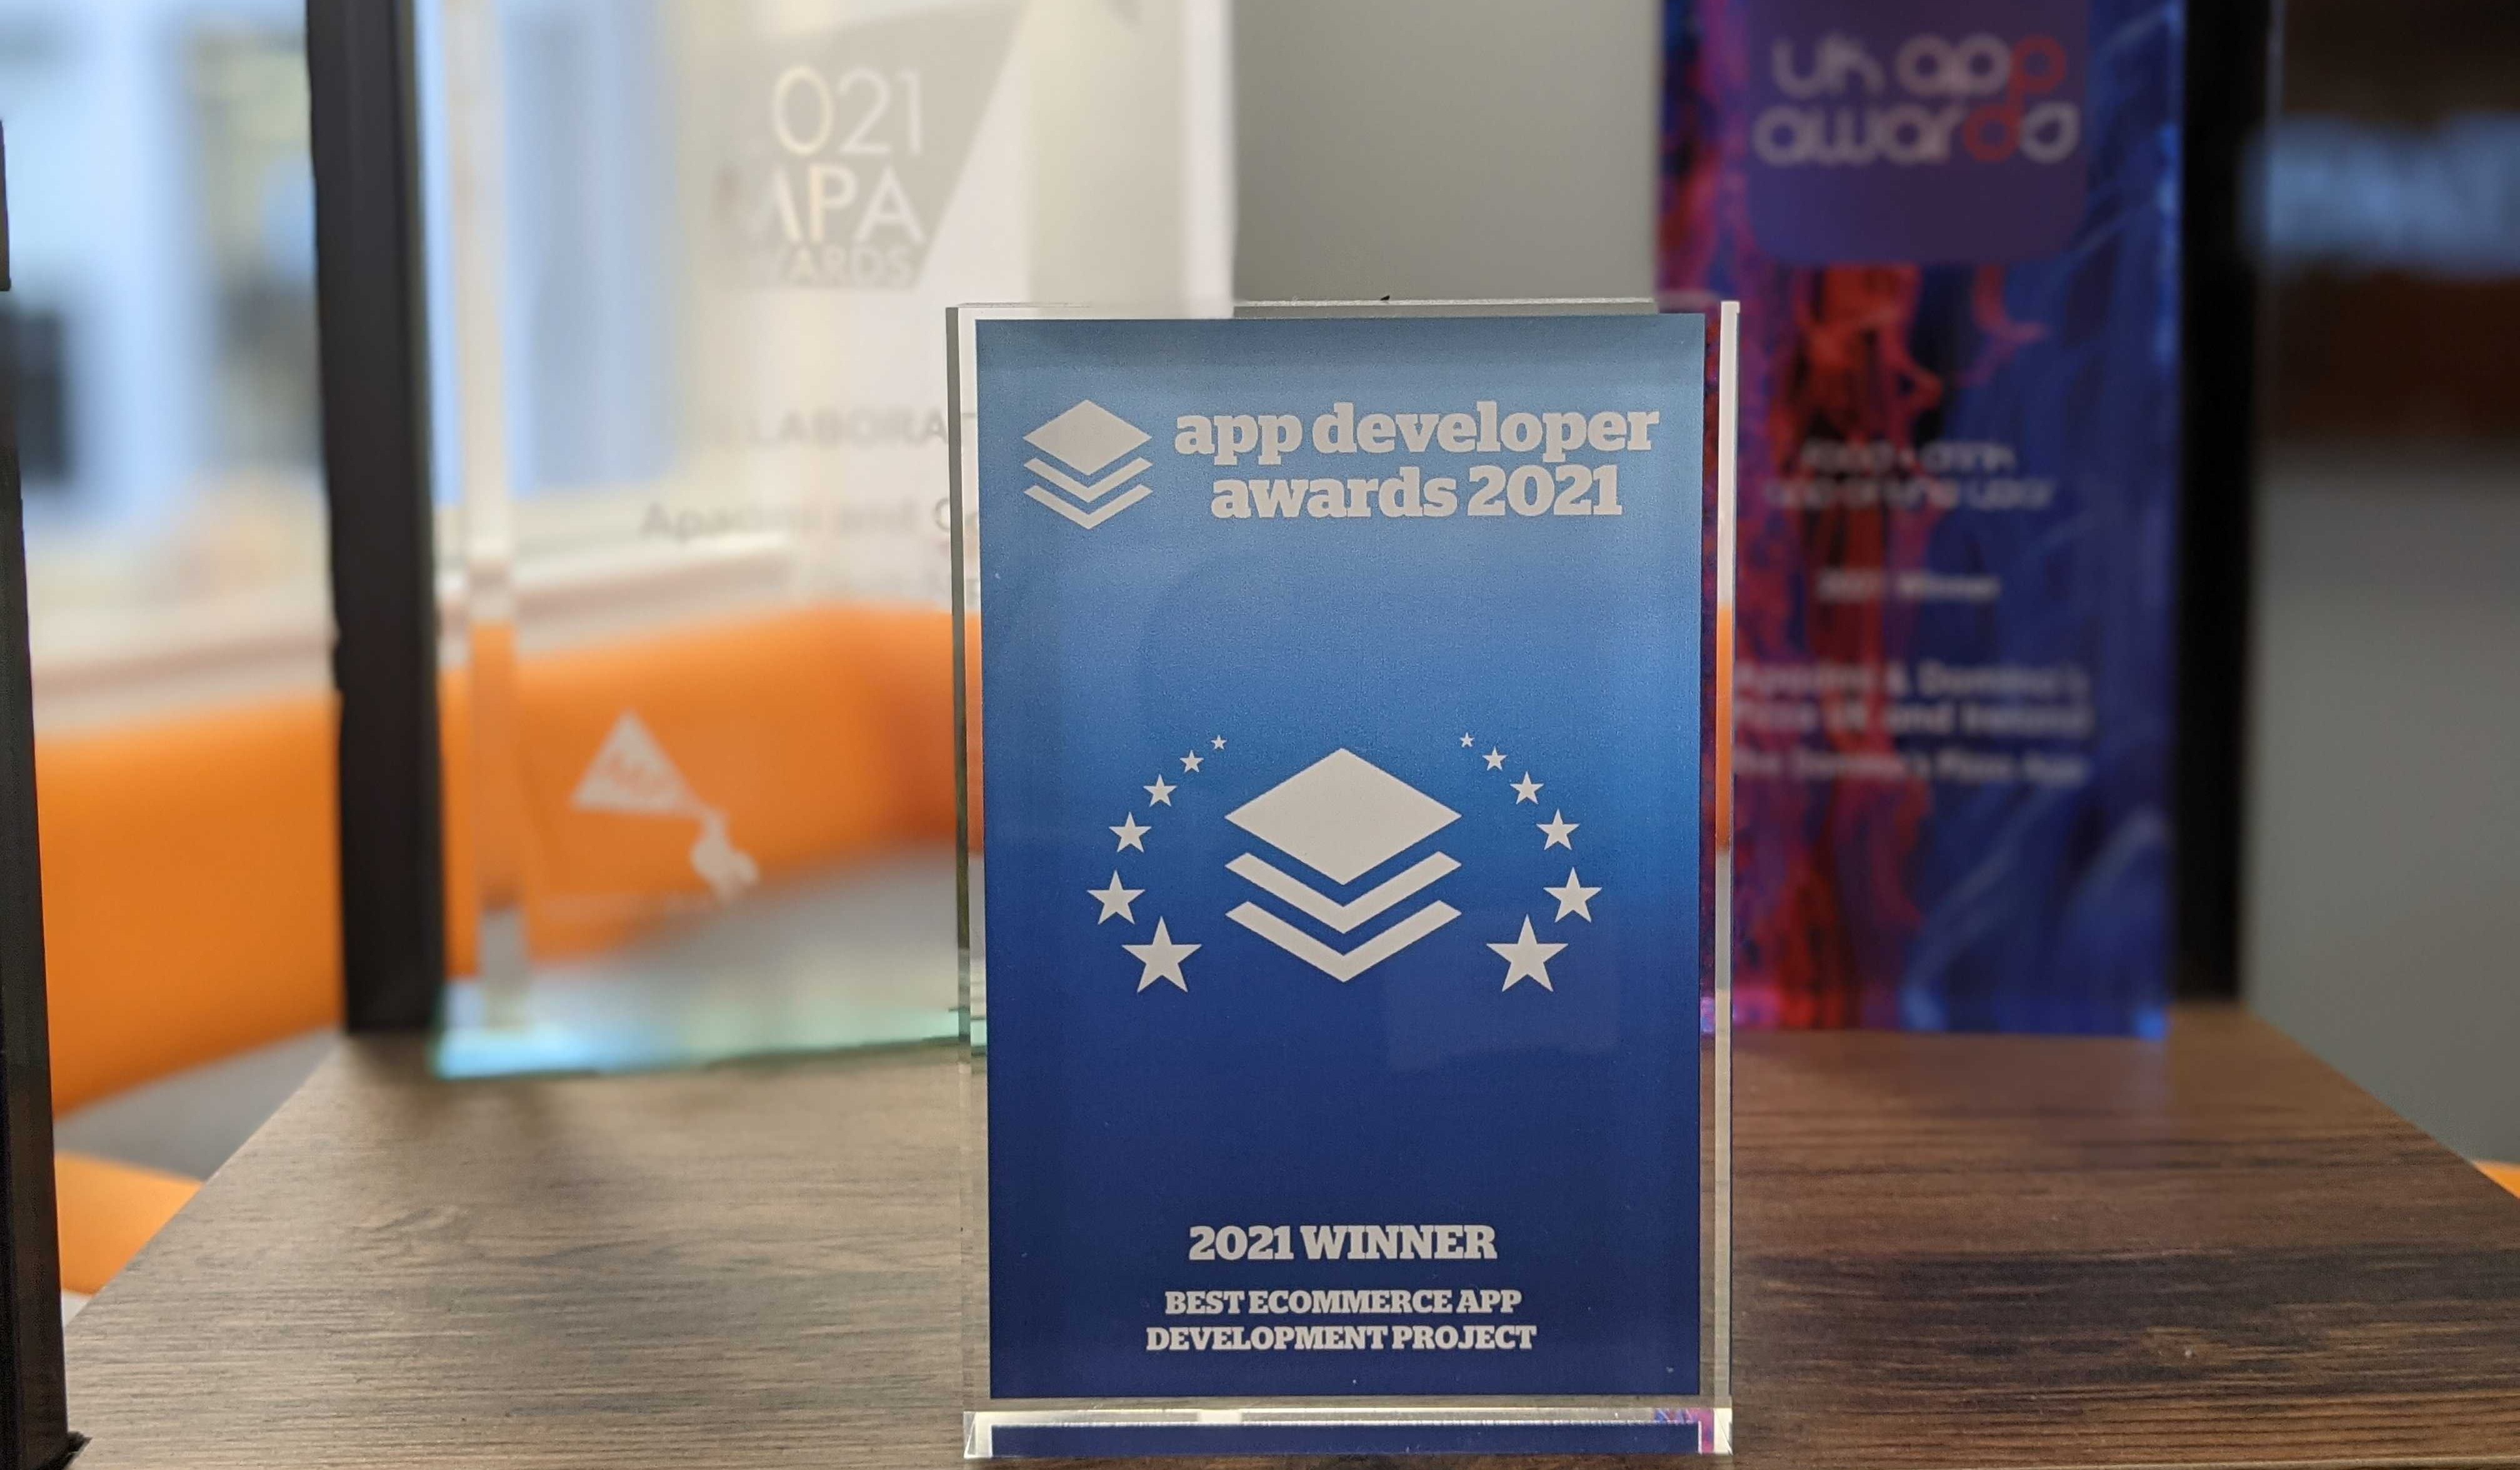 App developer awards 2021 award